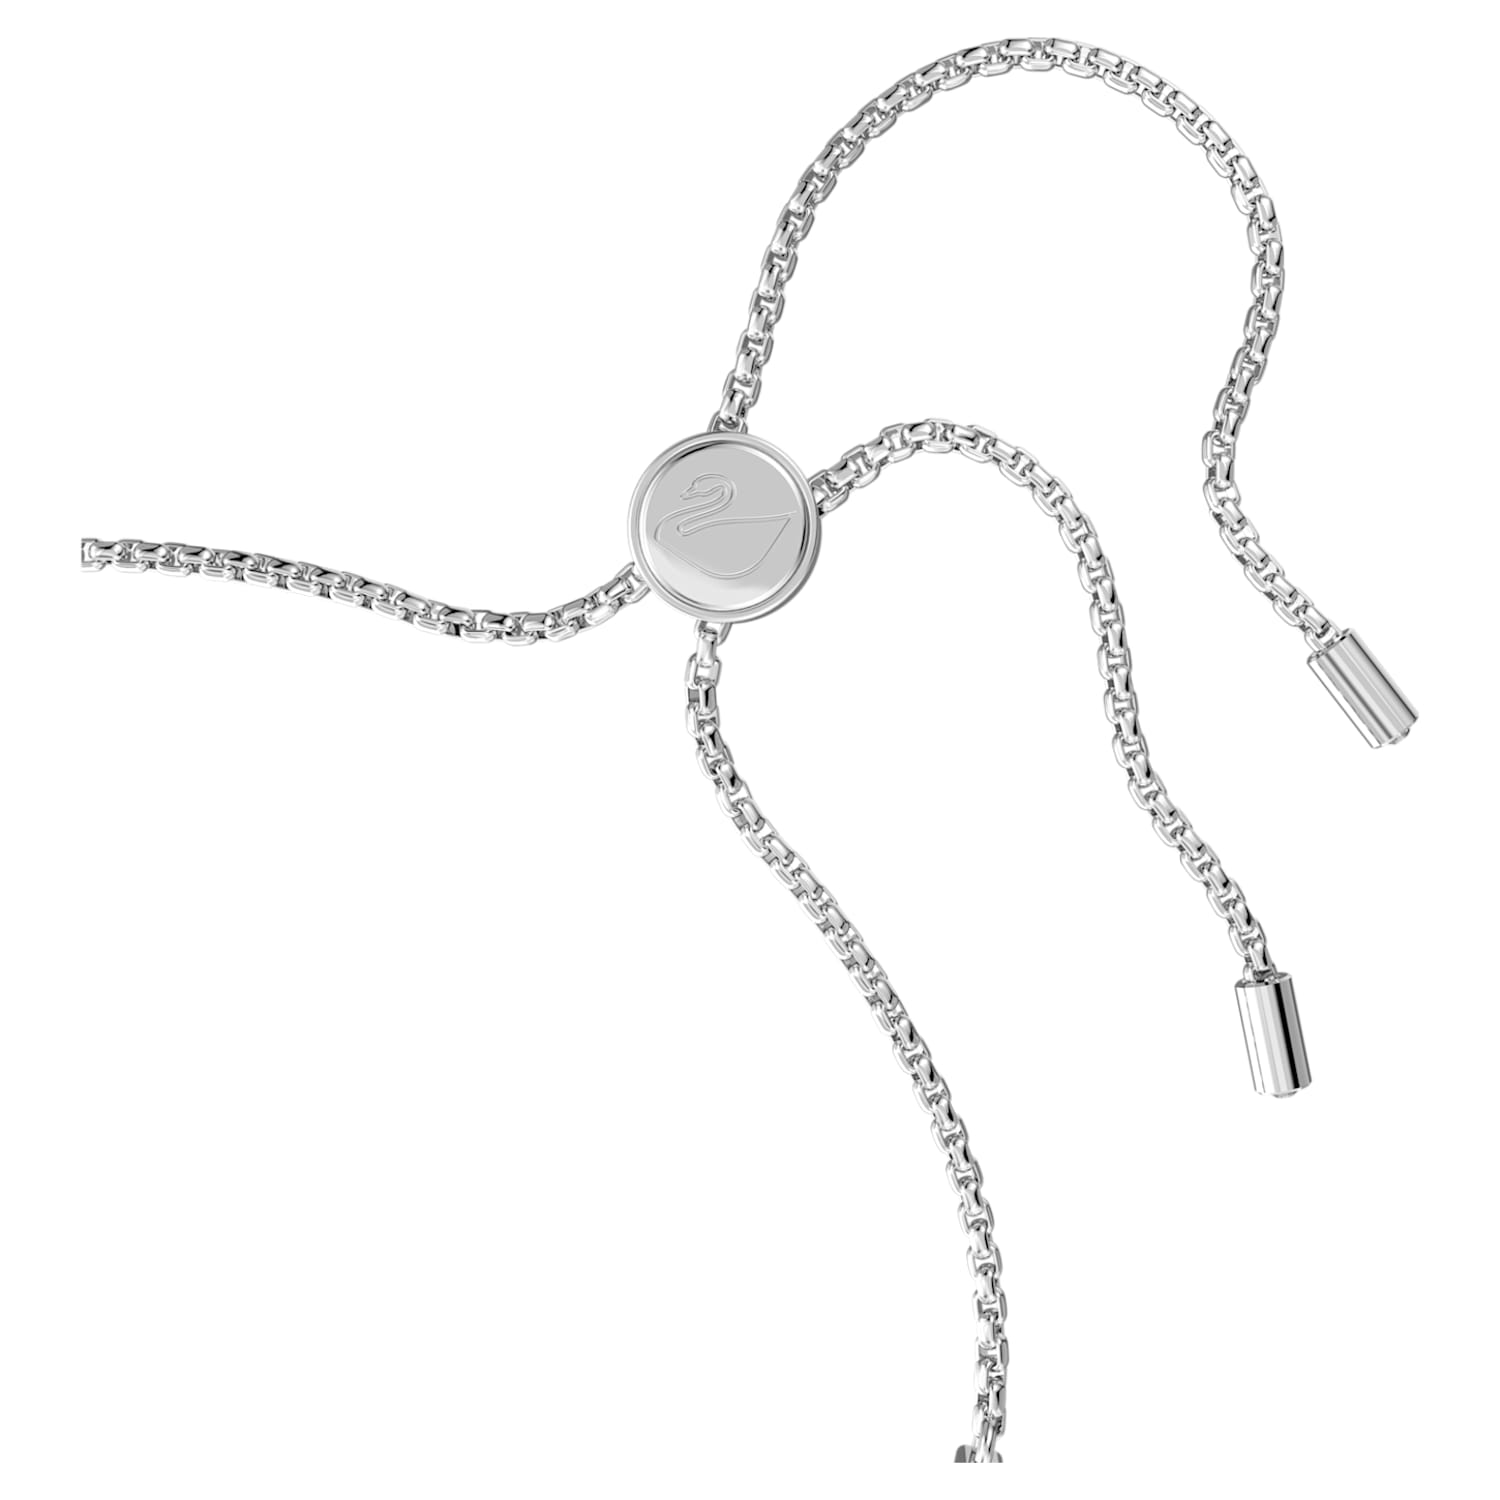 Swarovski Infinity bracelet Infinity and heart White Rhodium plated   Swarovski